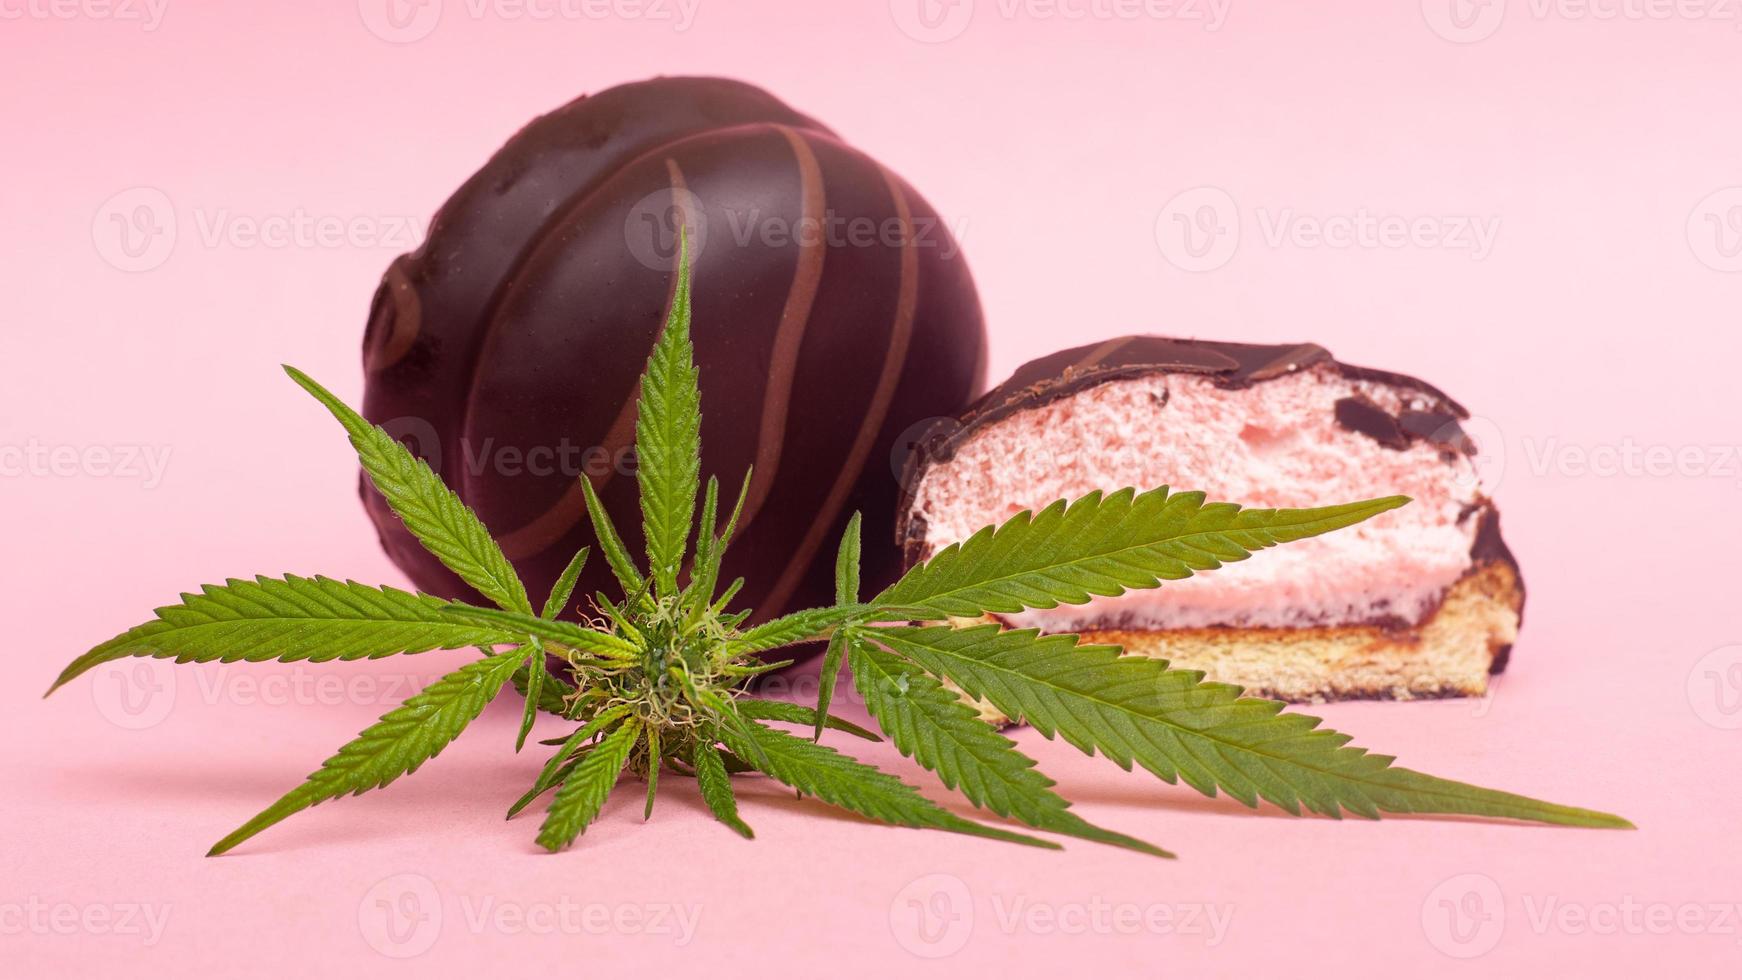 chocolade marshmallows en cannabis knop op een roze achtergrond foto